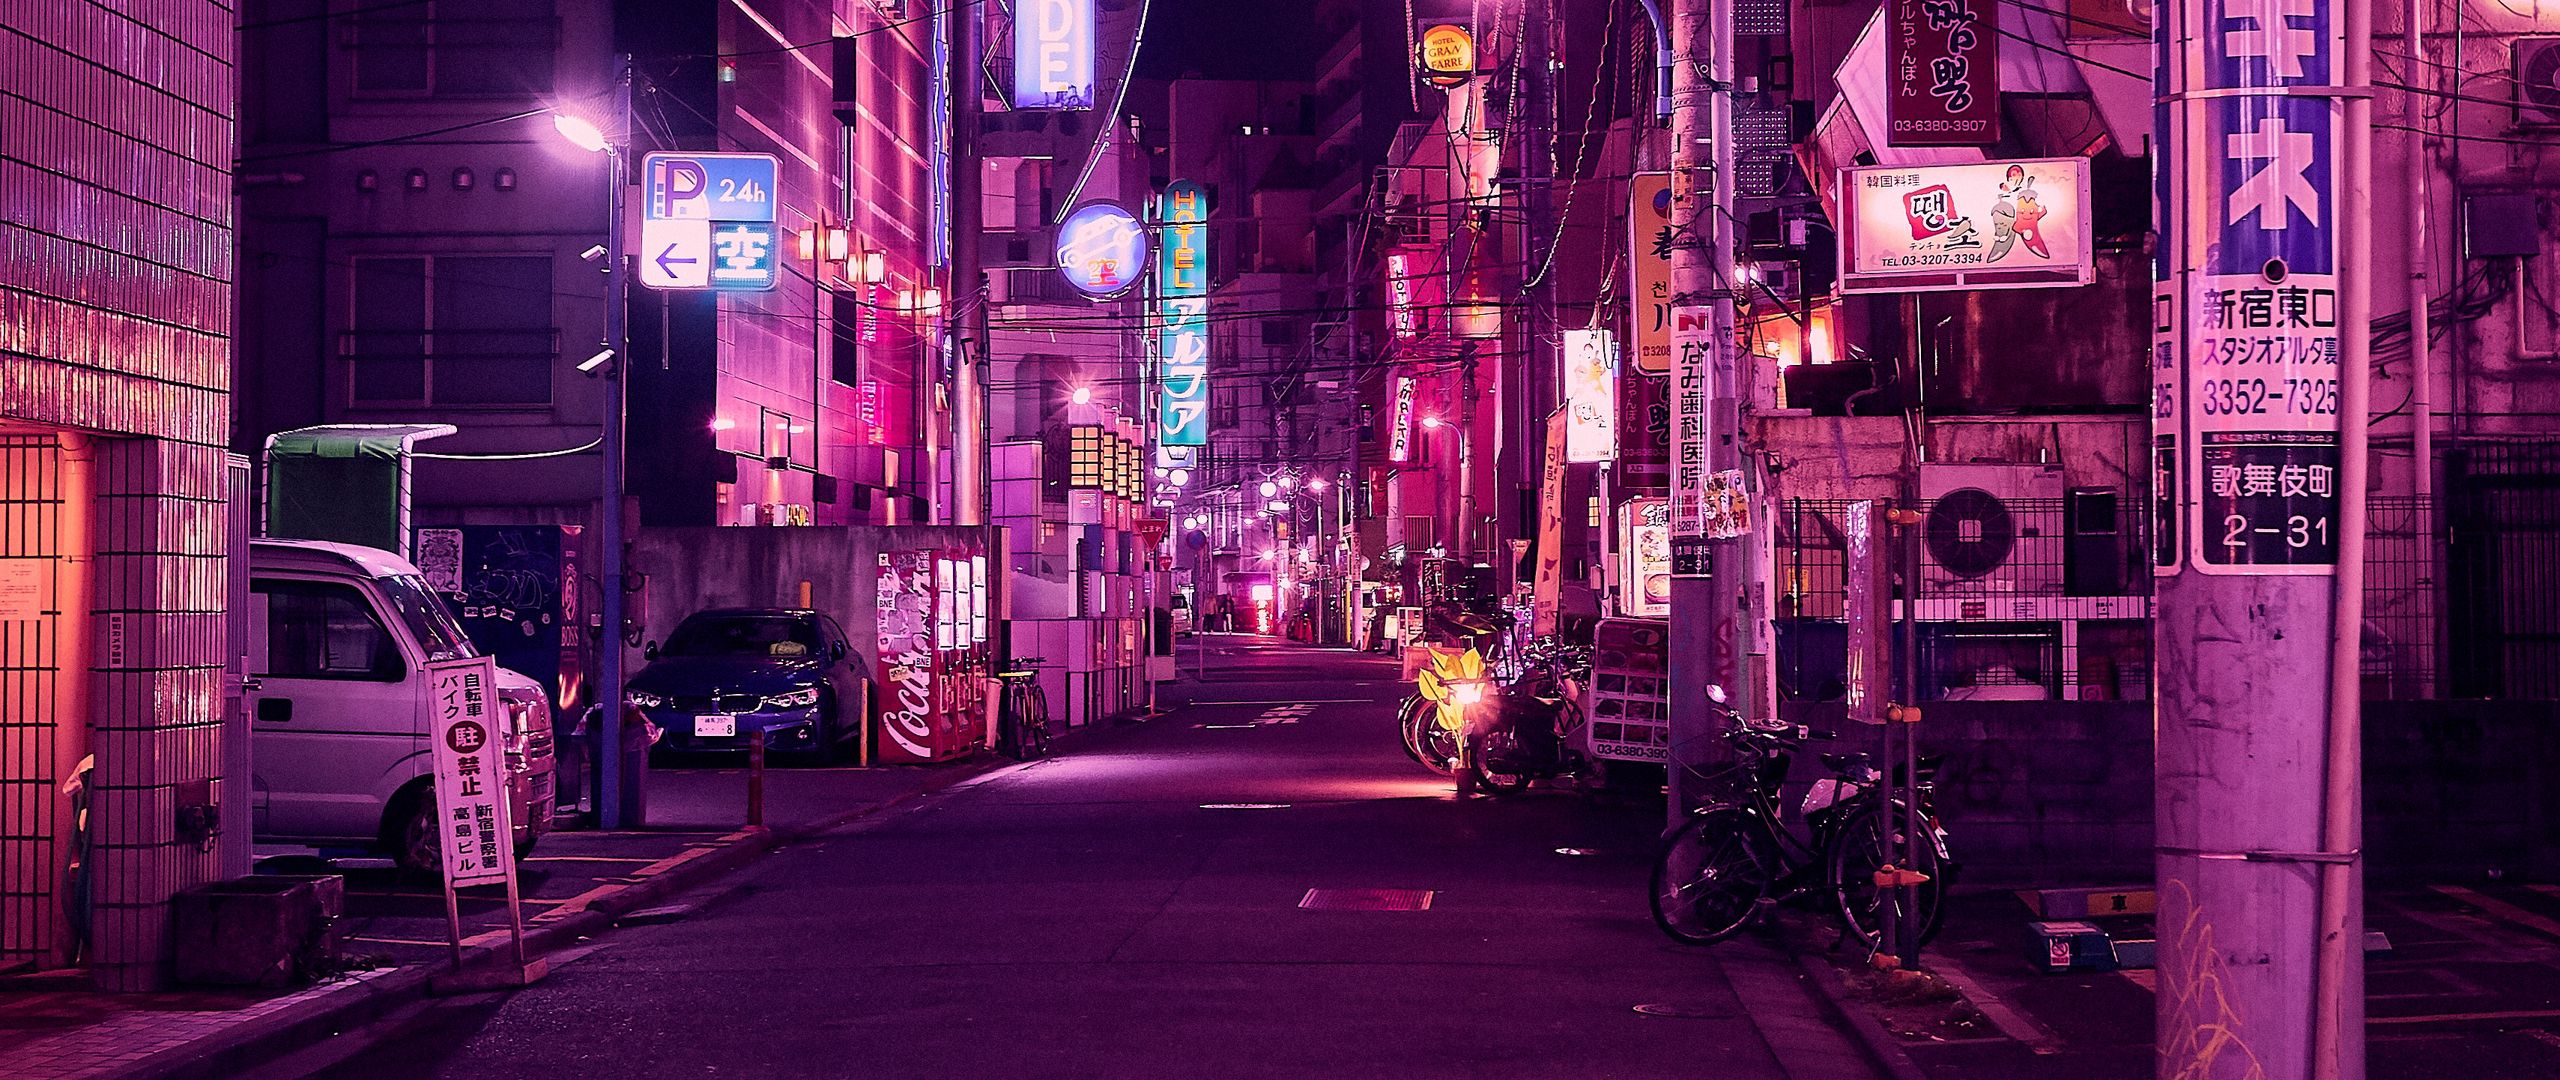 Download wallpaper 2560x1080 street, neon, night city, backlight, purple,  tokyo dual wide 1080p hd background